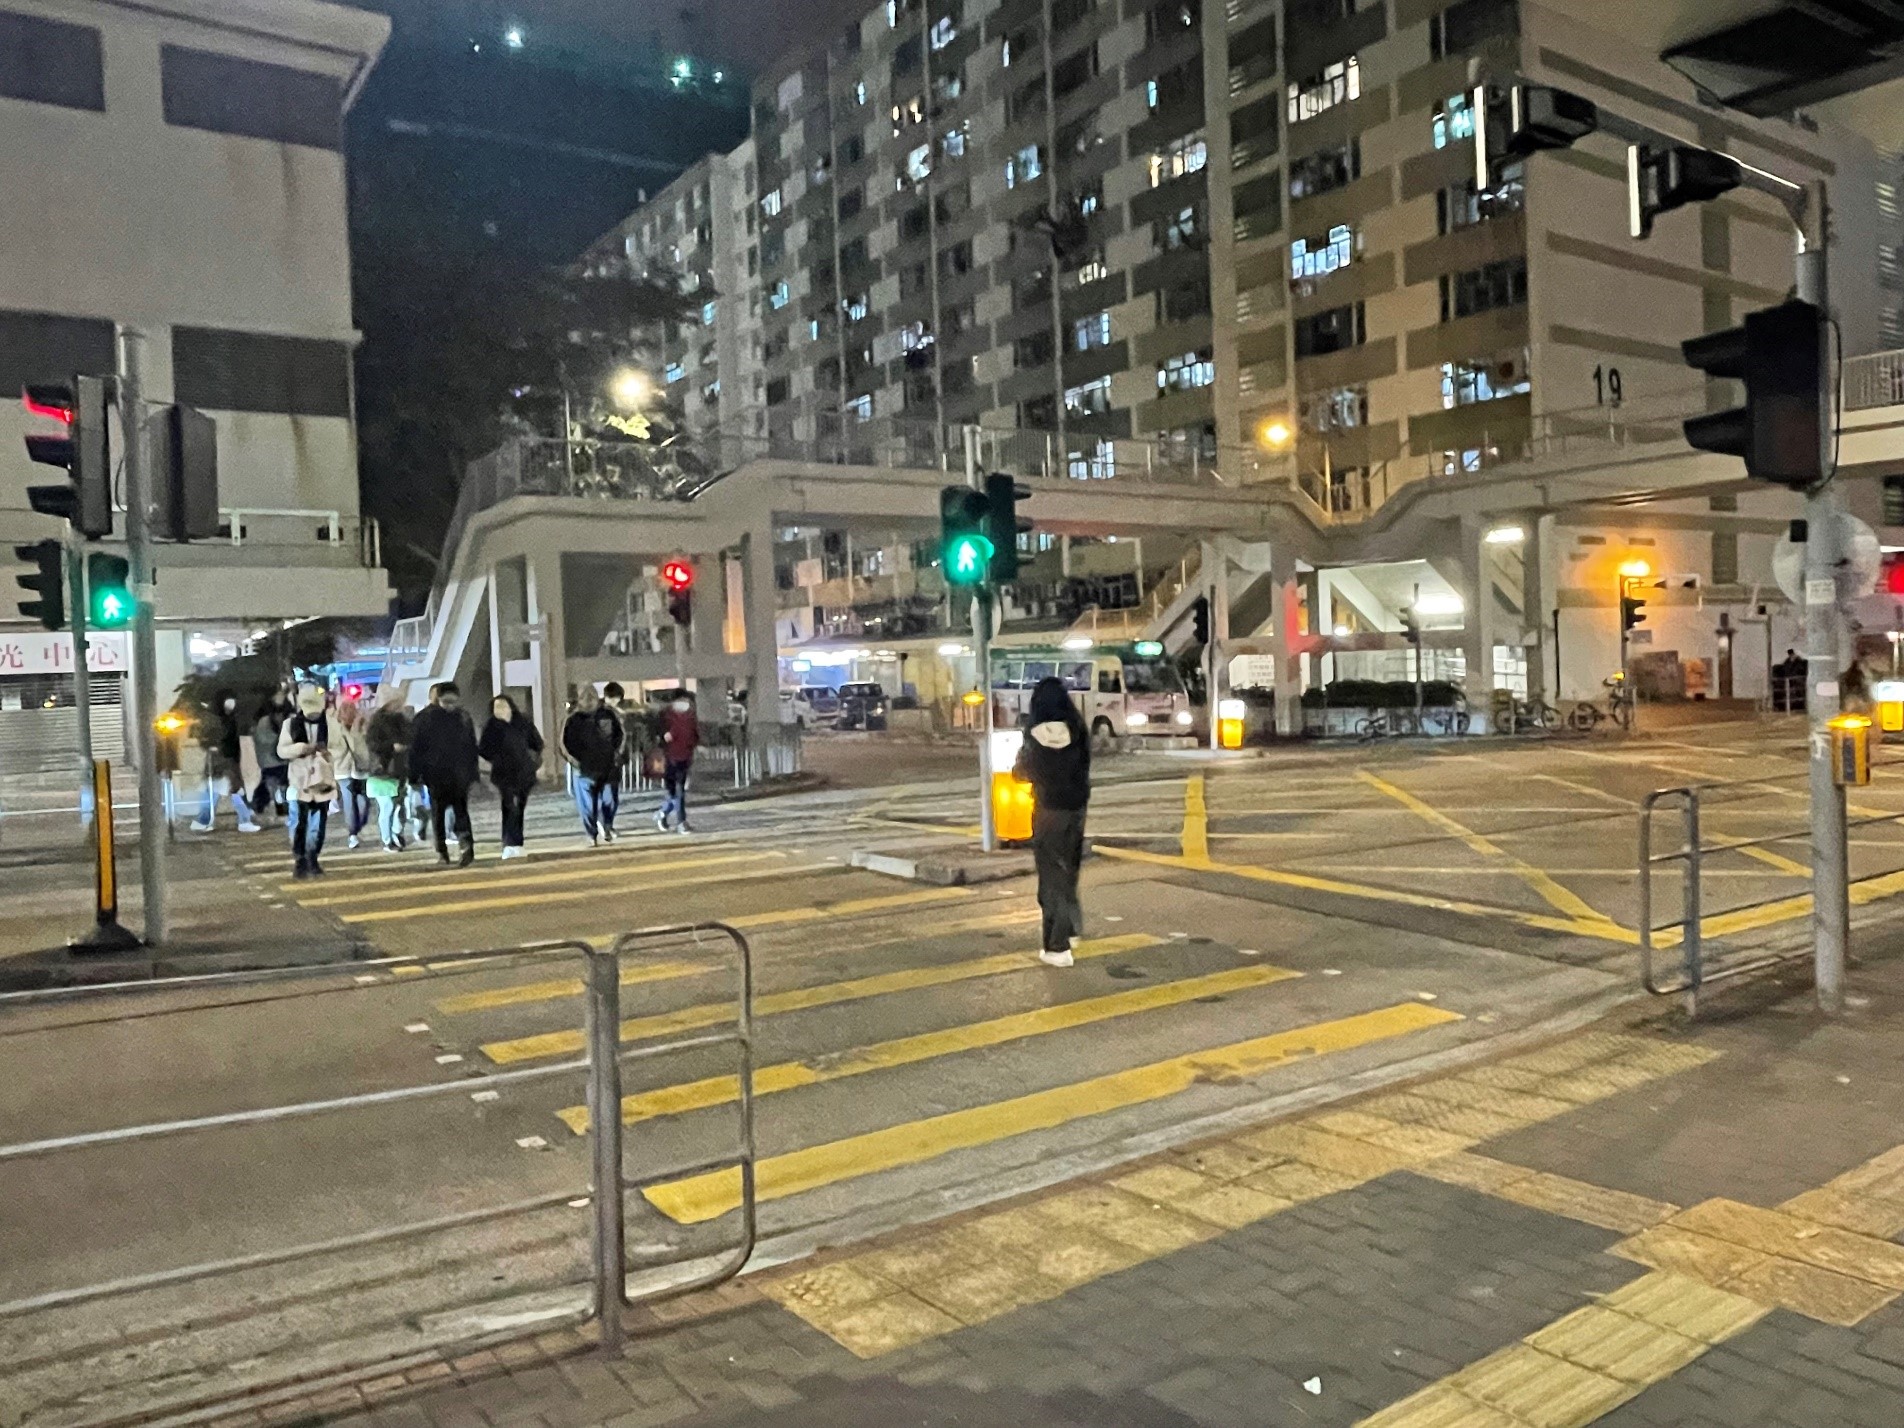 Pedestrian crossing with green light